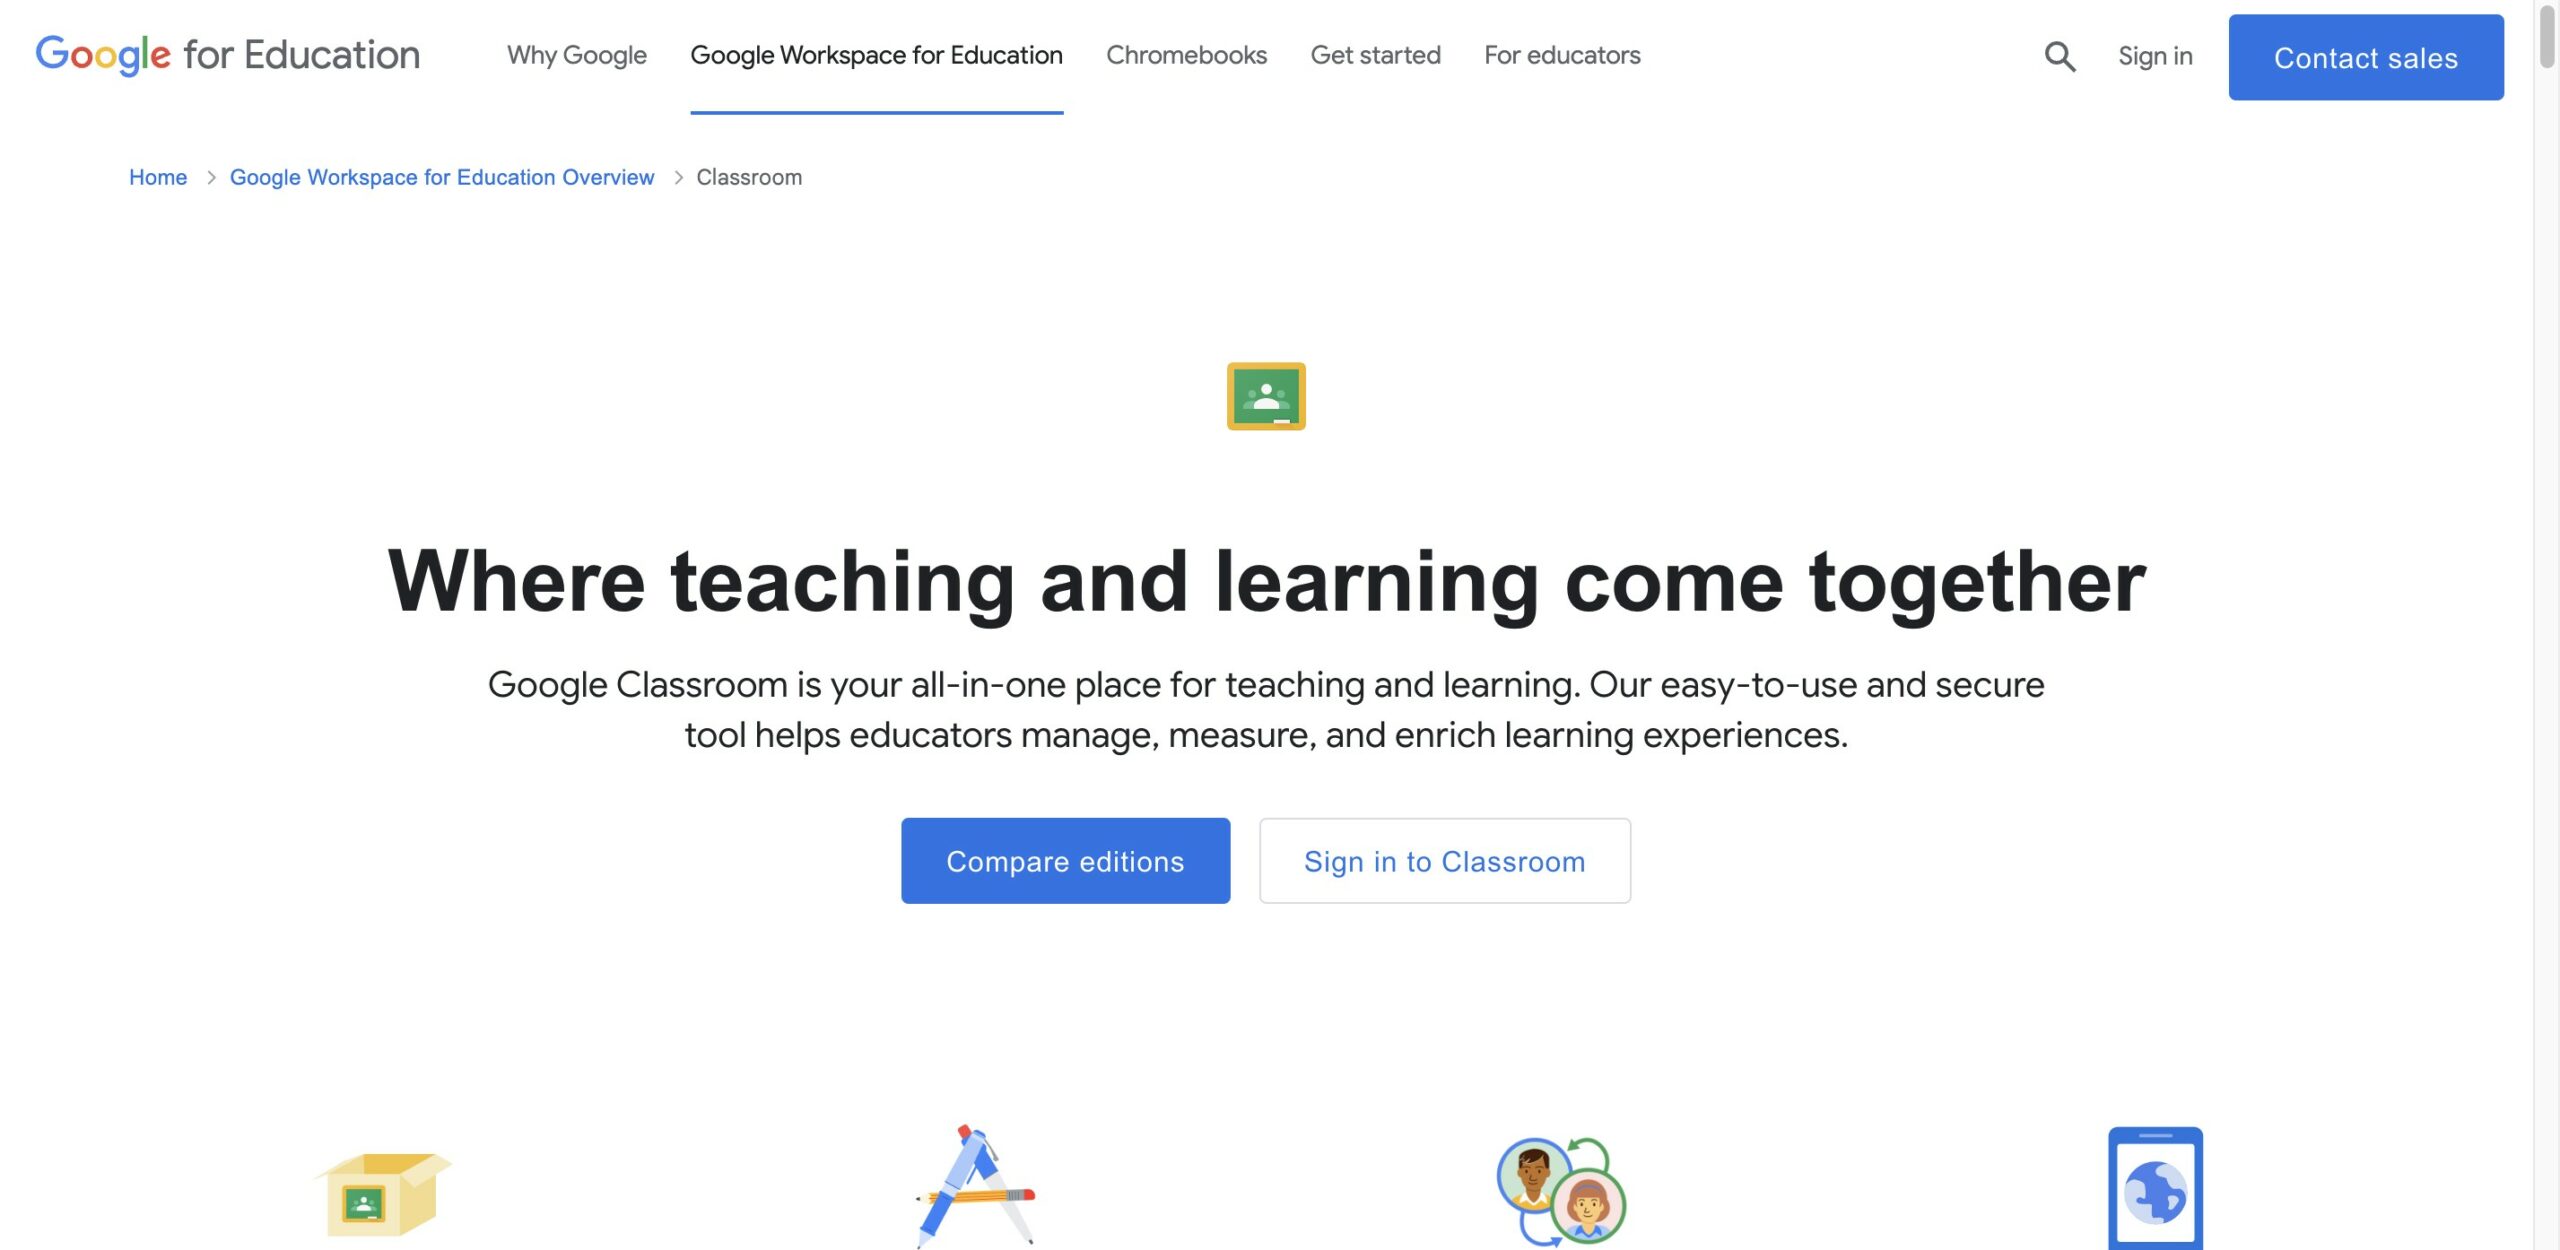 Can private tutors use google classroom? -Ostado-tutoring